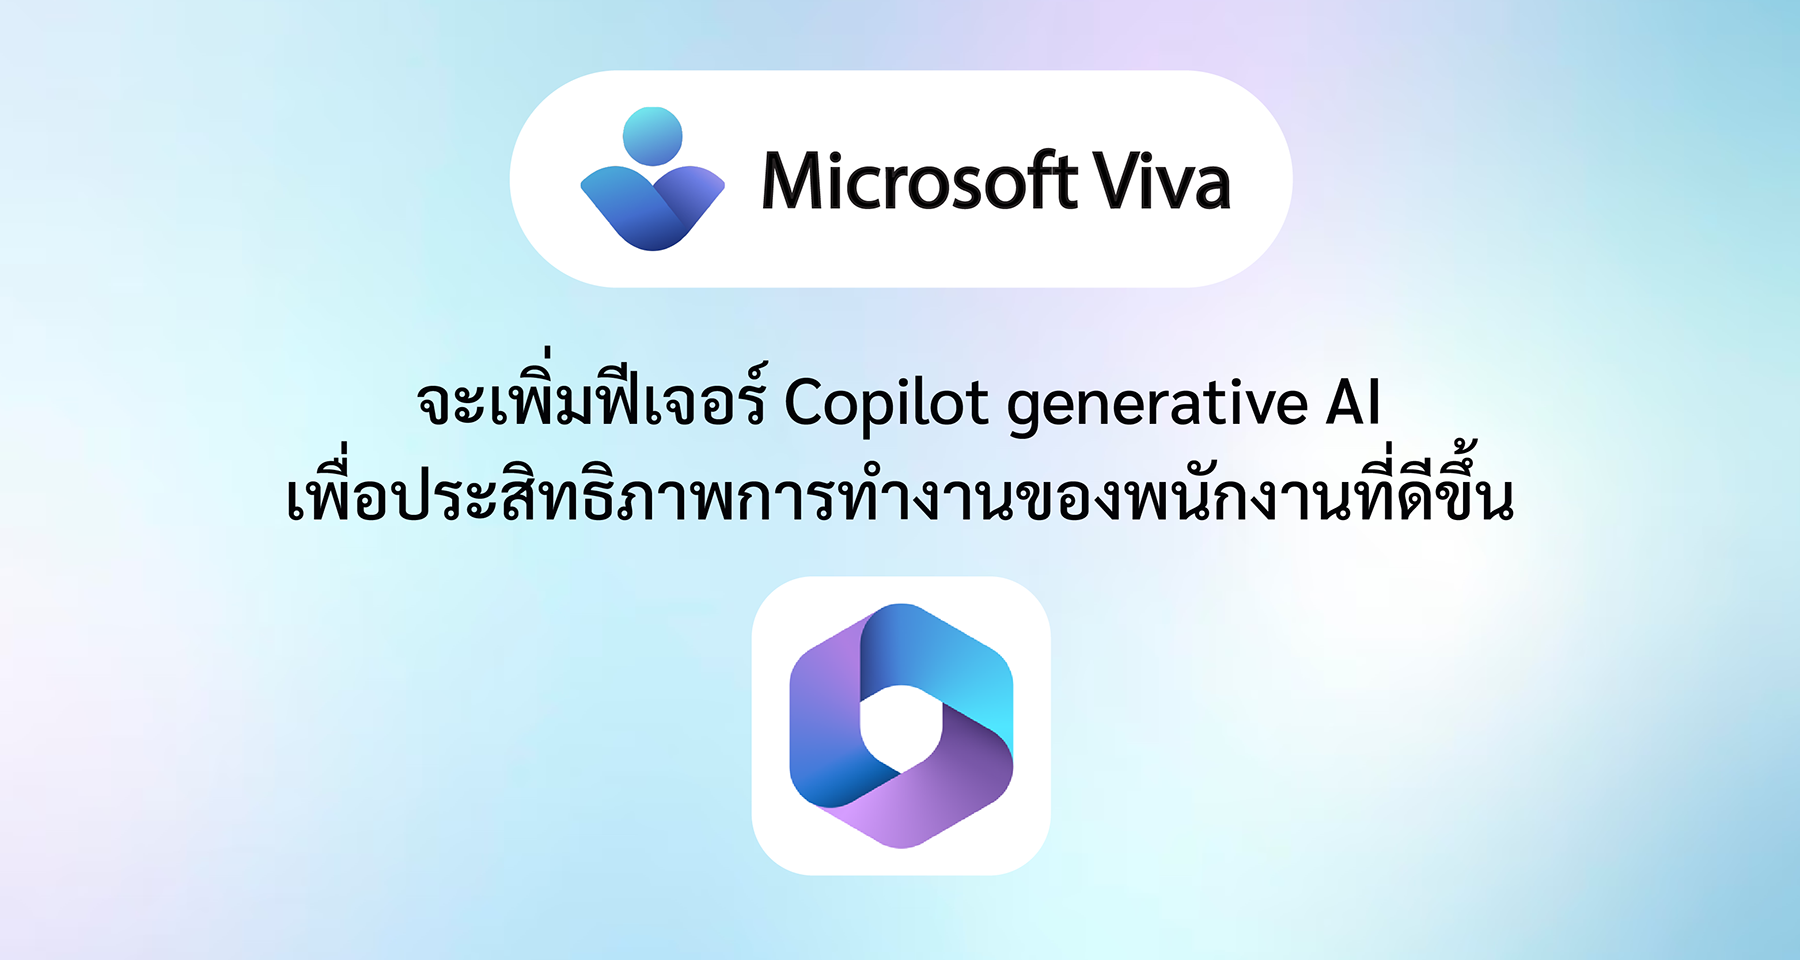 Microsoft Viva จะเพิ่มฟีเจอร์ Copilot generative AI เพื่อประสิทธิภาพการทำงานของพนักงานที่ดีขึ้น